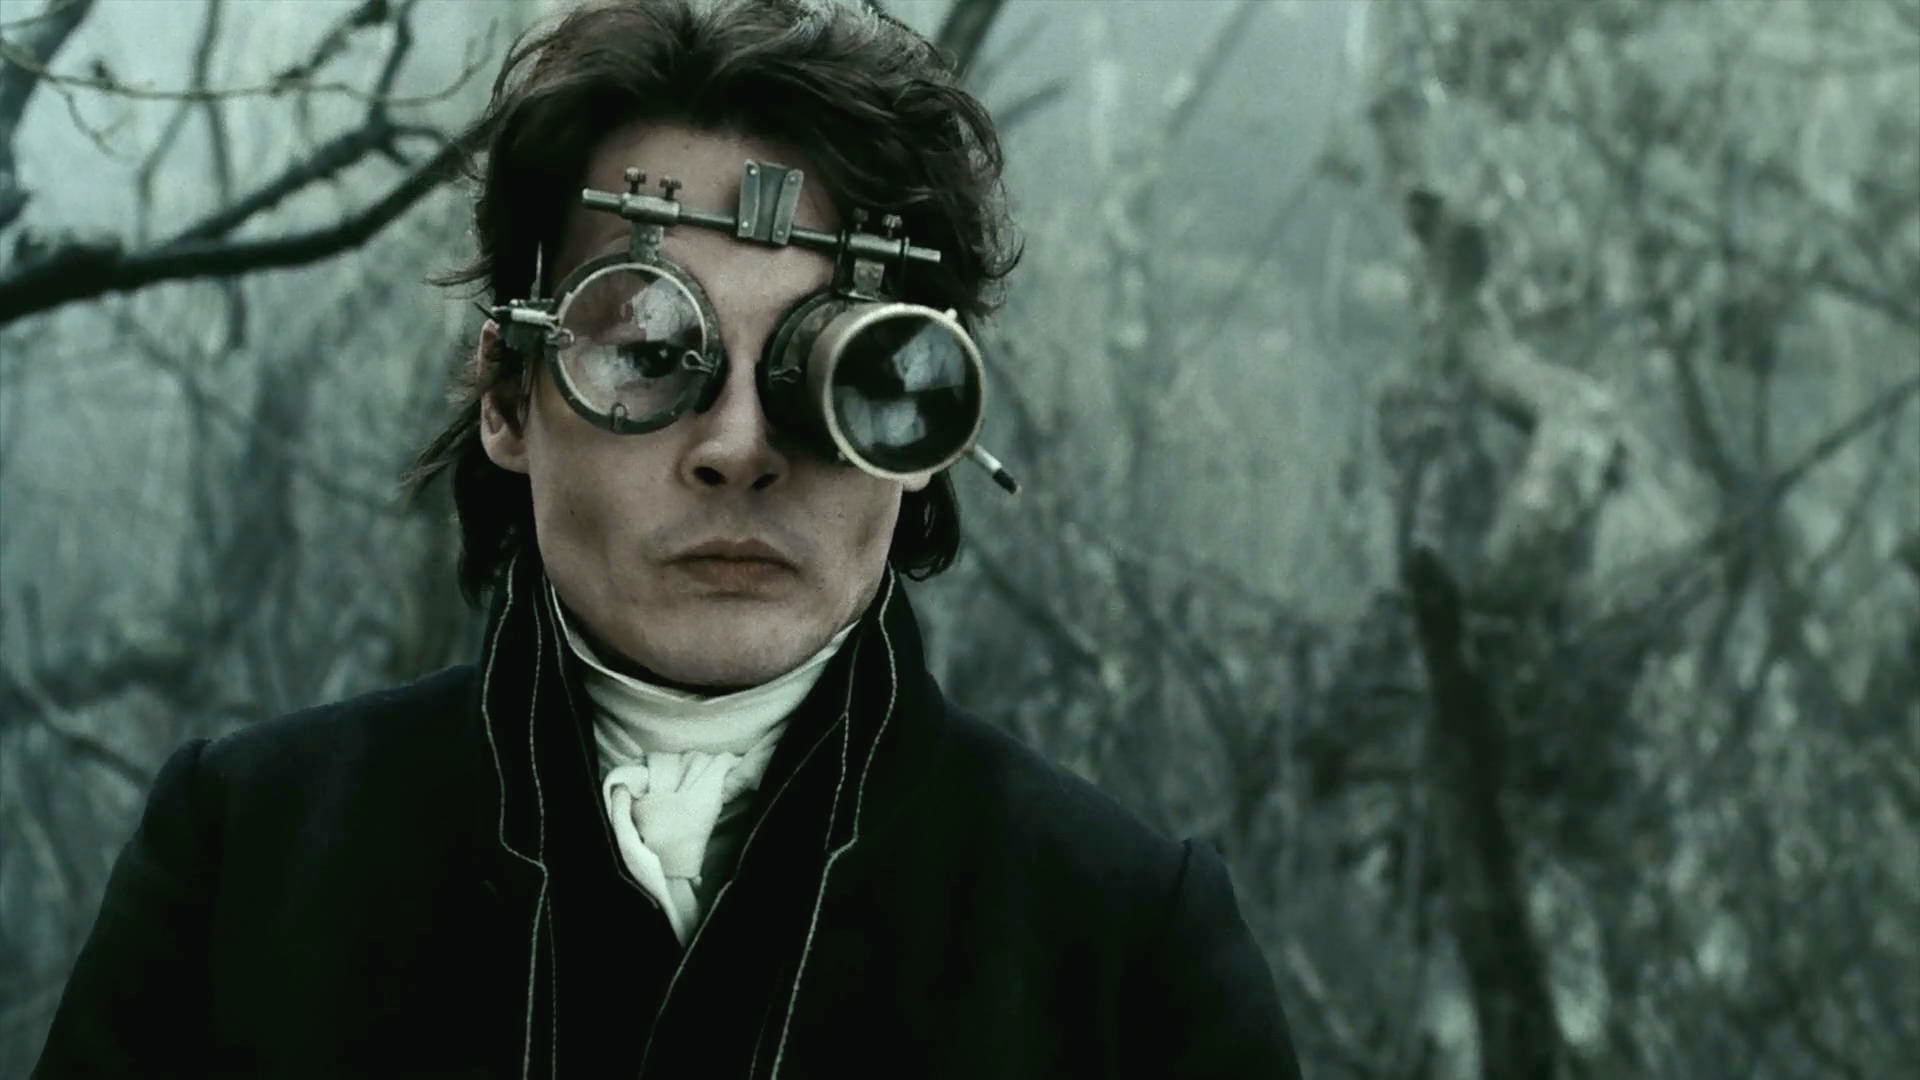 Ichabod Crane wearing strange goggles